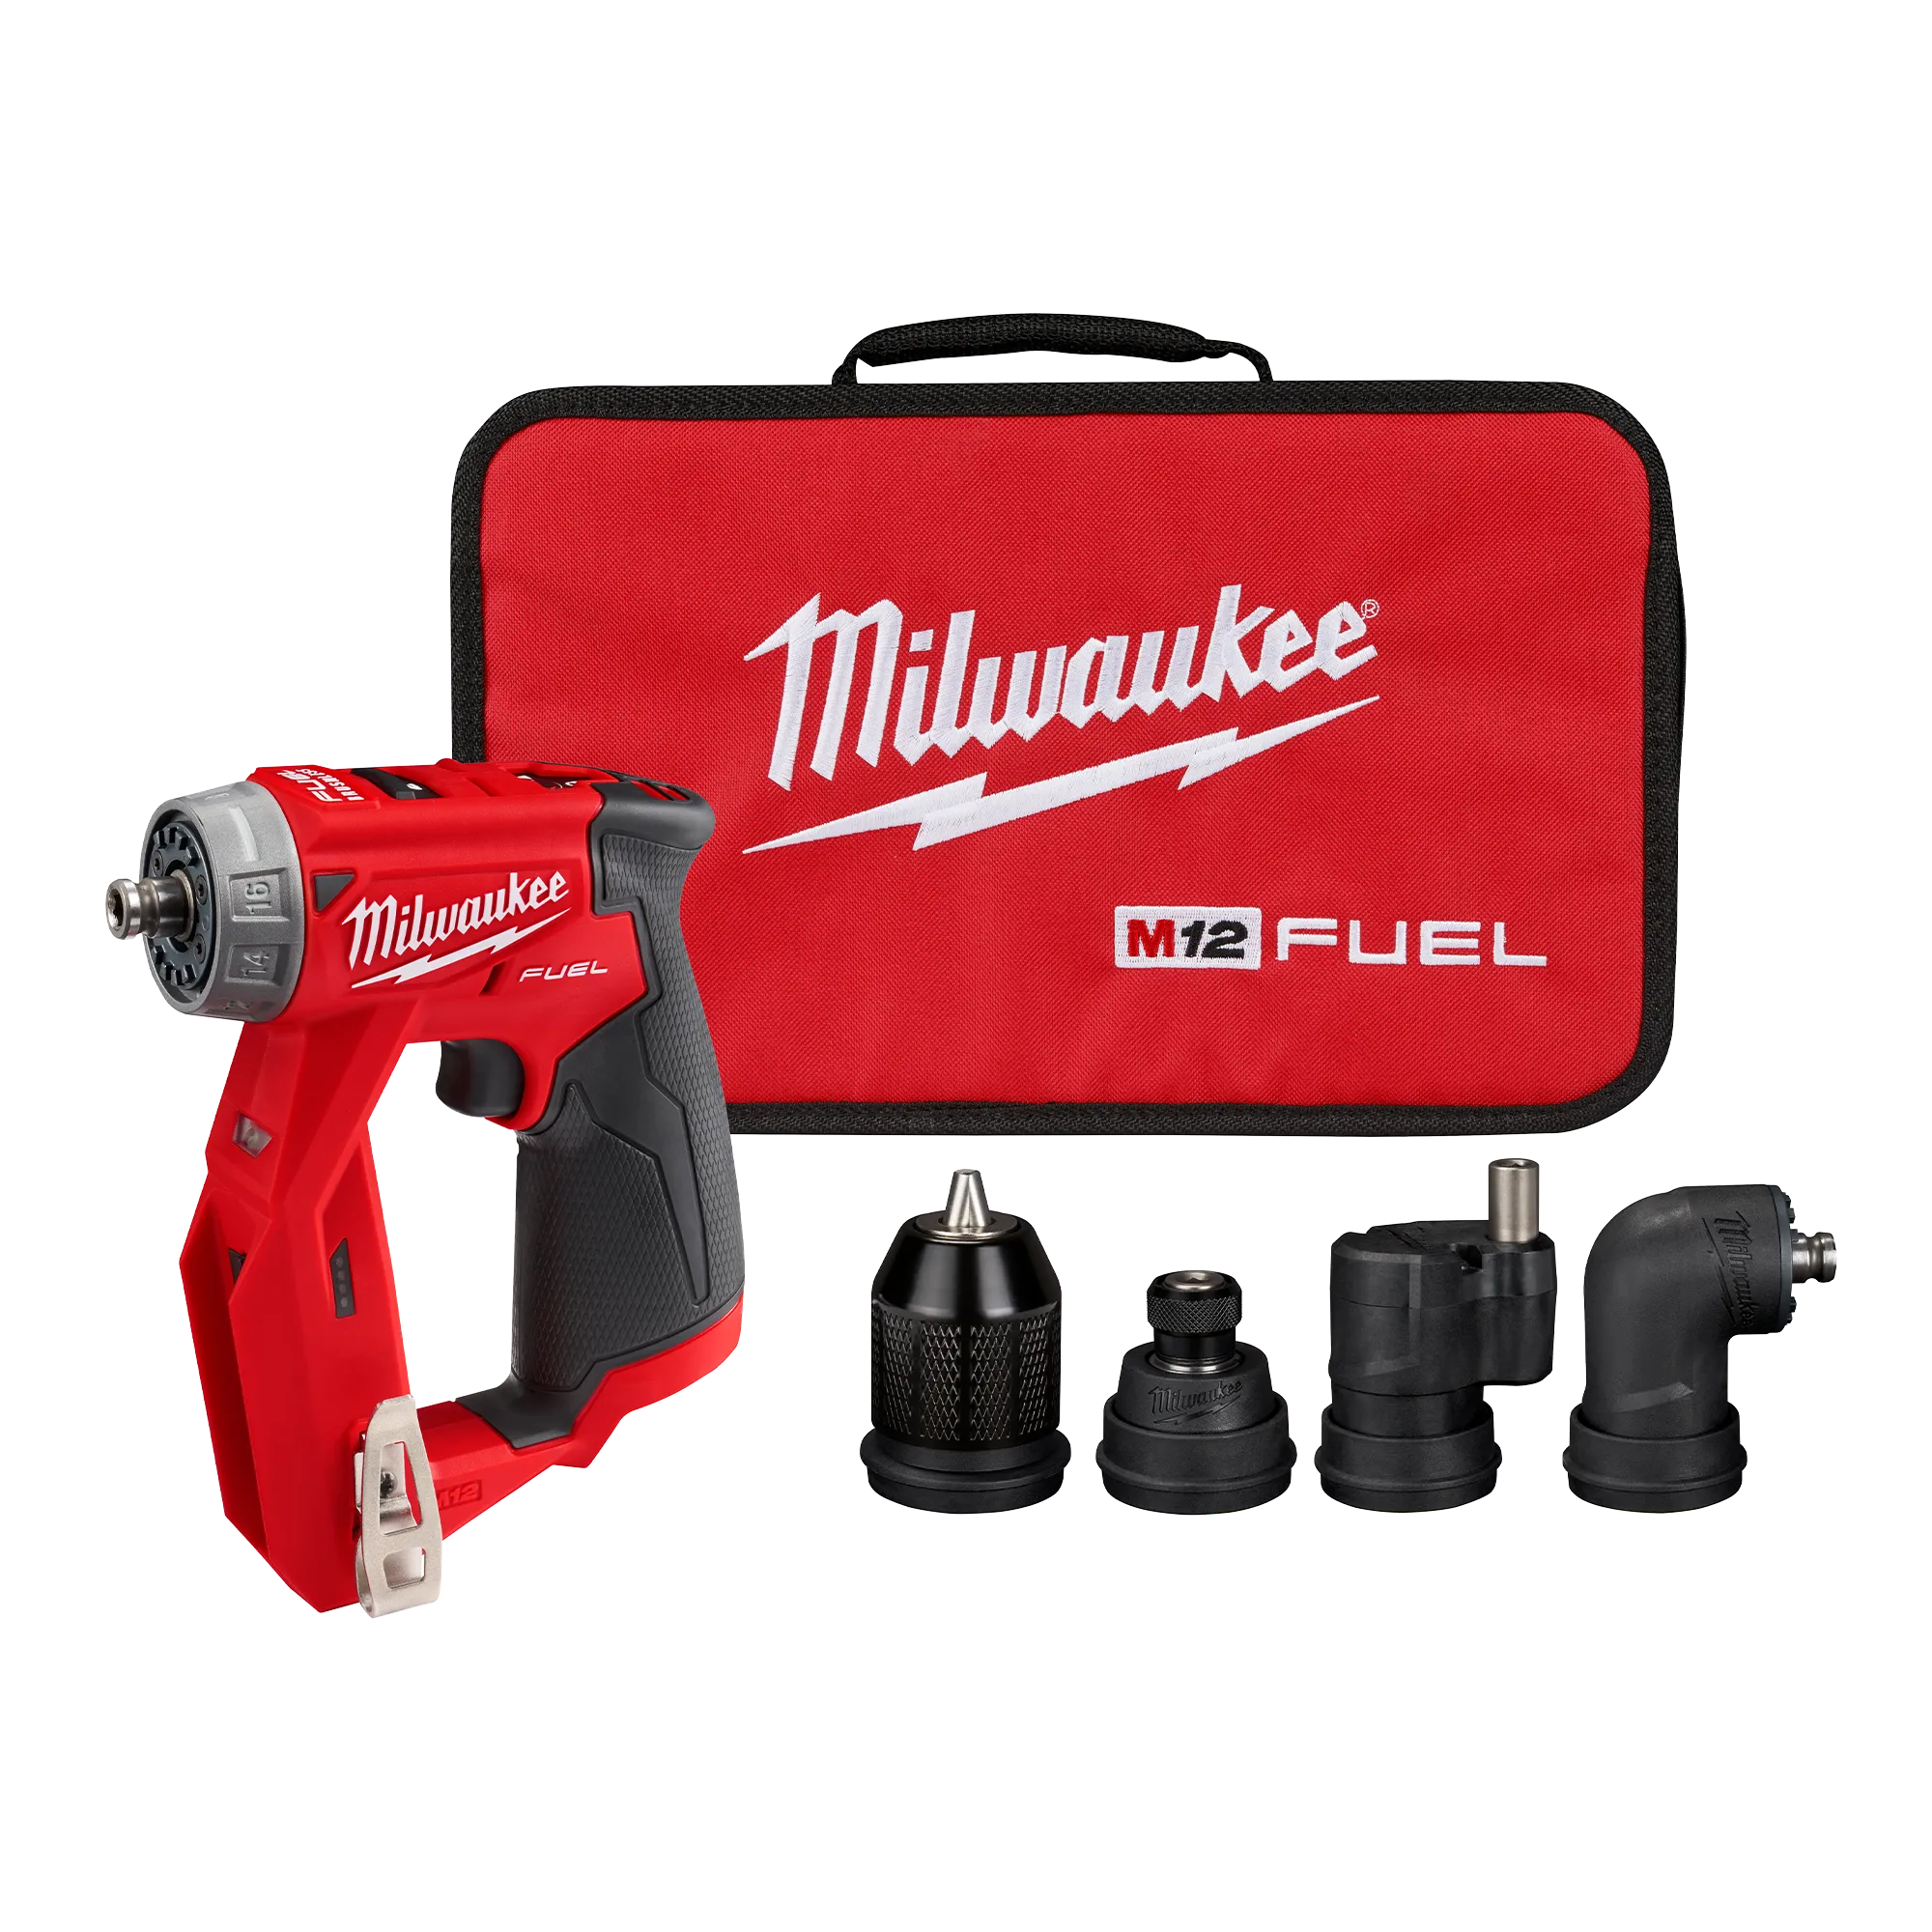 Milwaukee M12 tool & Battery holder mount bracket storage 12v 12 v Drill Impact